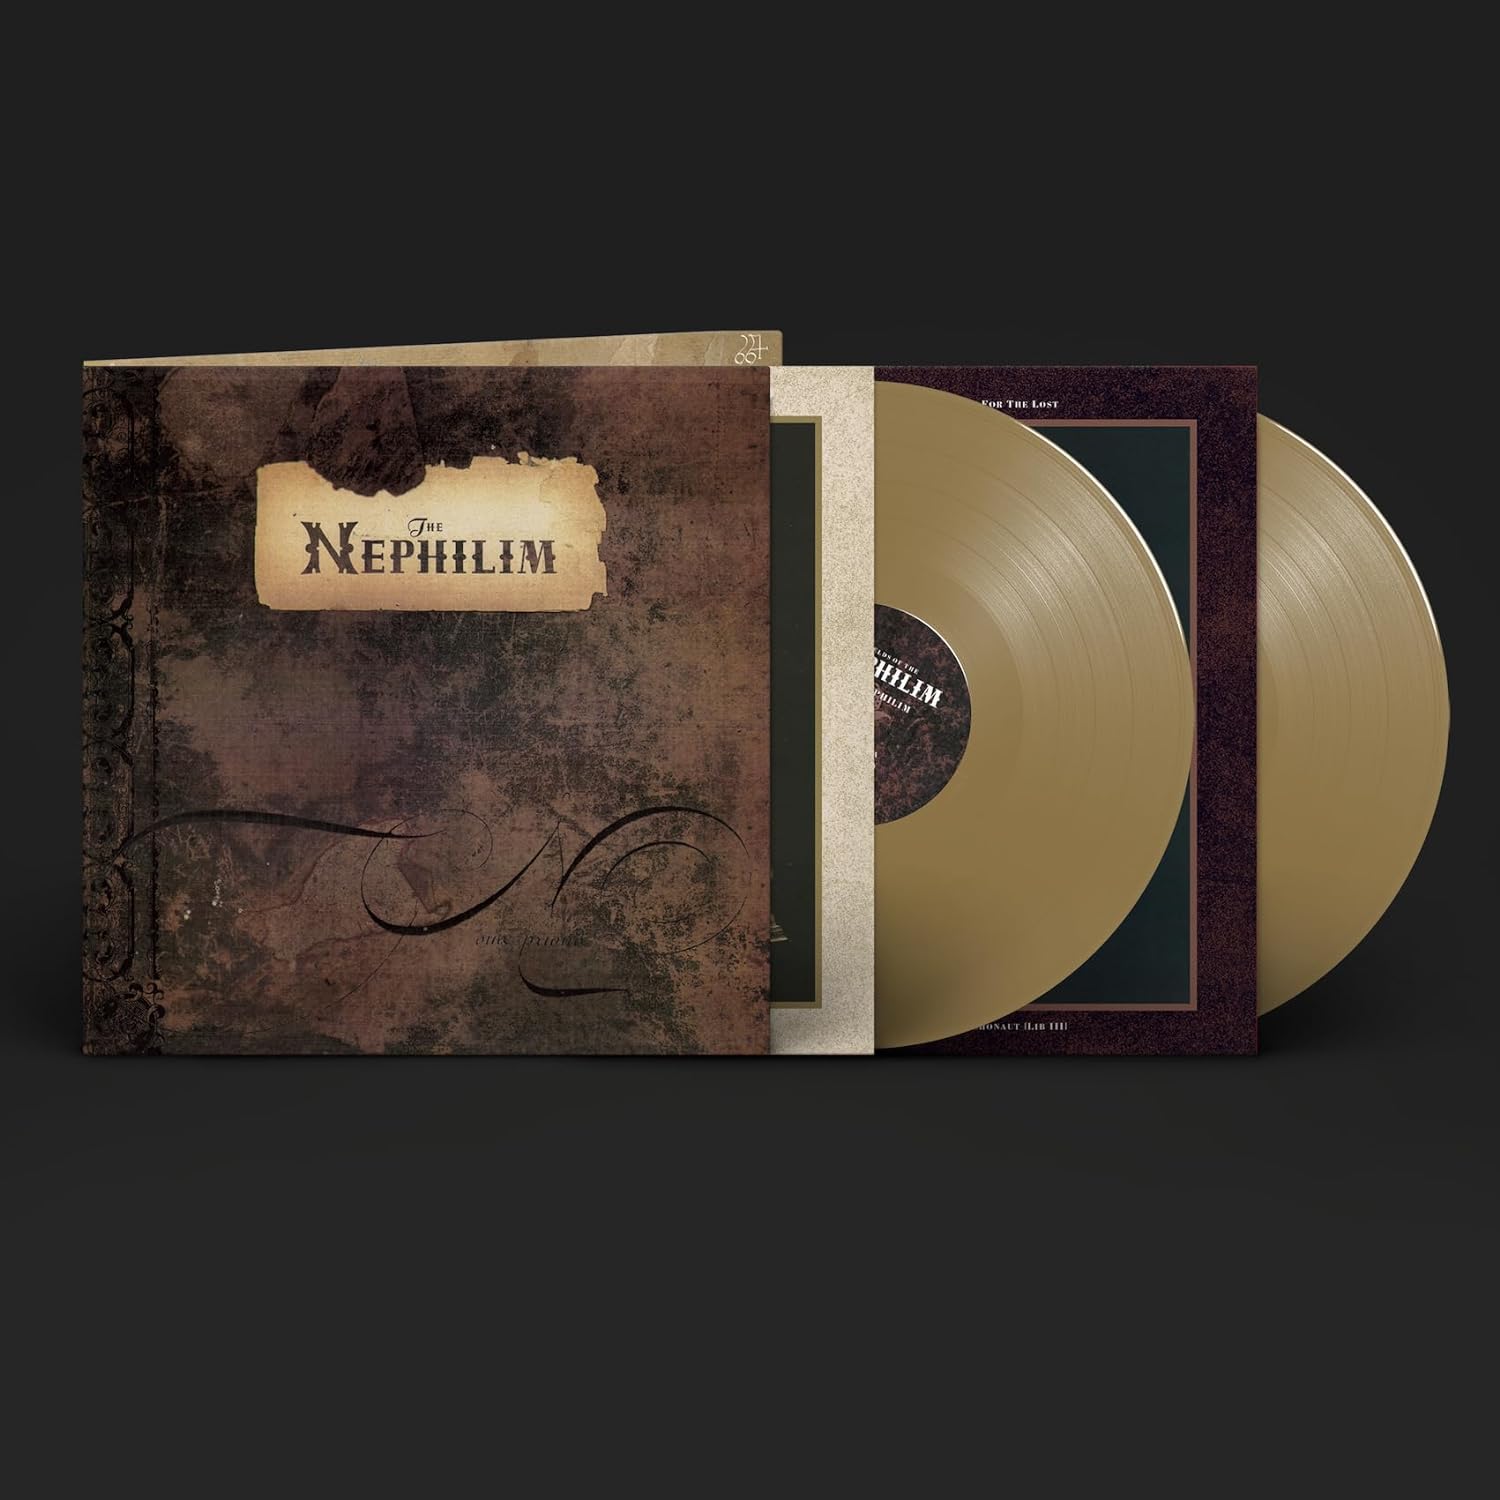 FIELDS OF NEPHILIM – NEPHILIM deluxe LP2